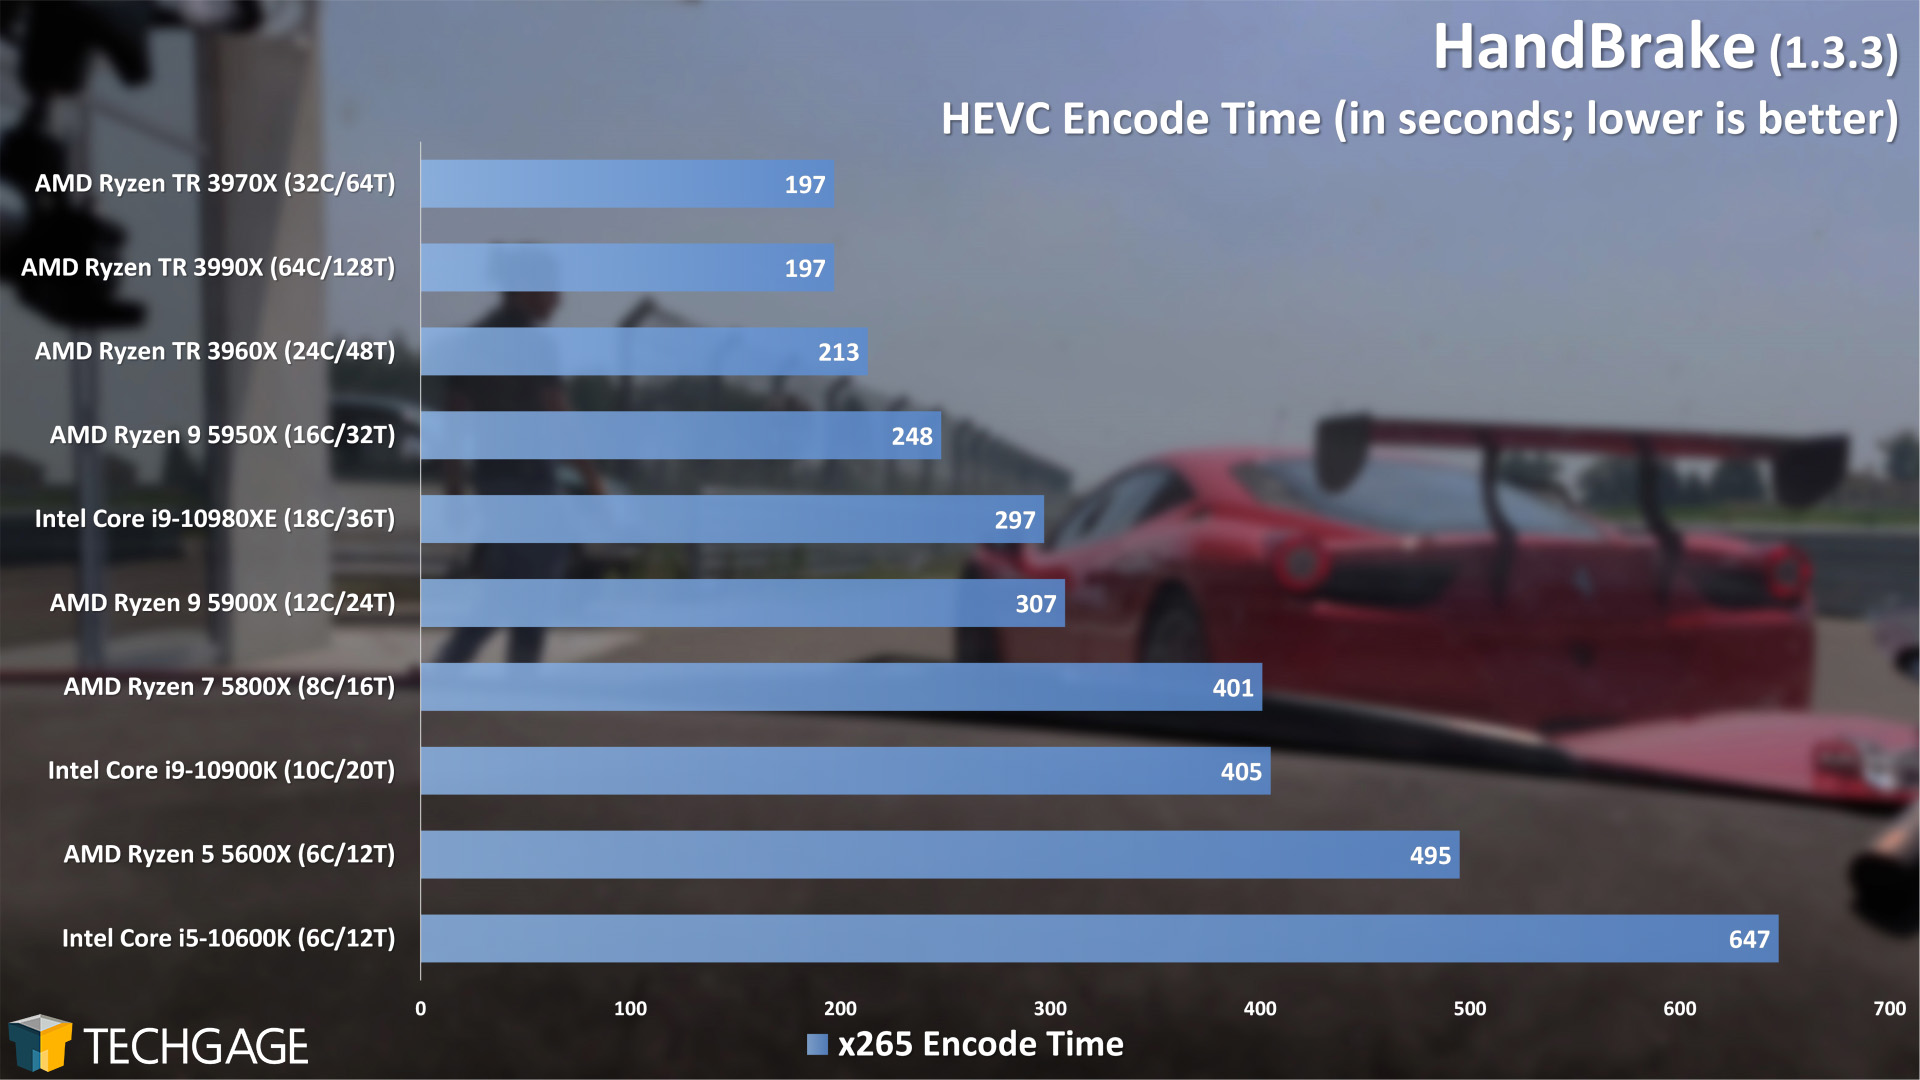 HandBrake-HEVC-Encode-Performance-February-2021.jpg